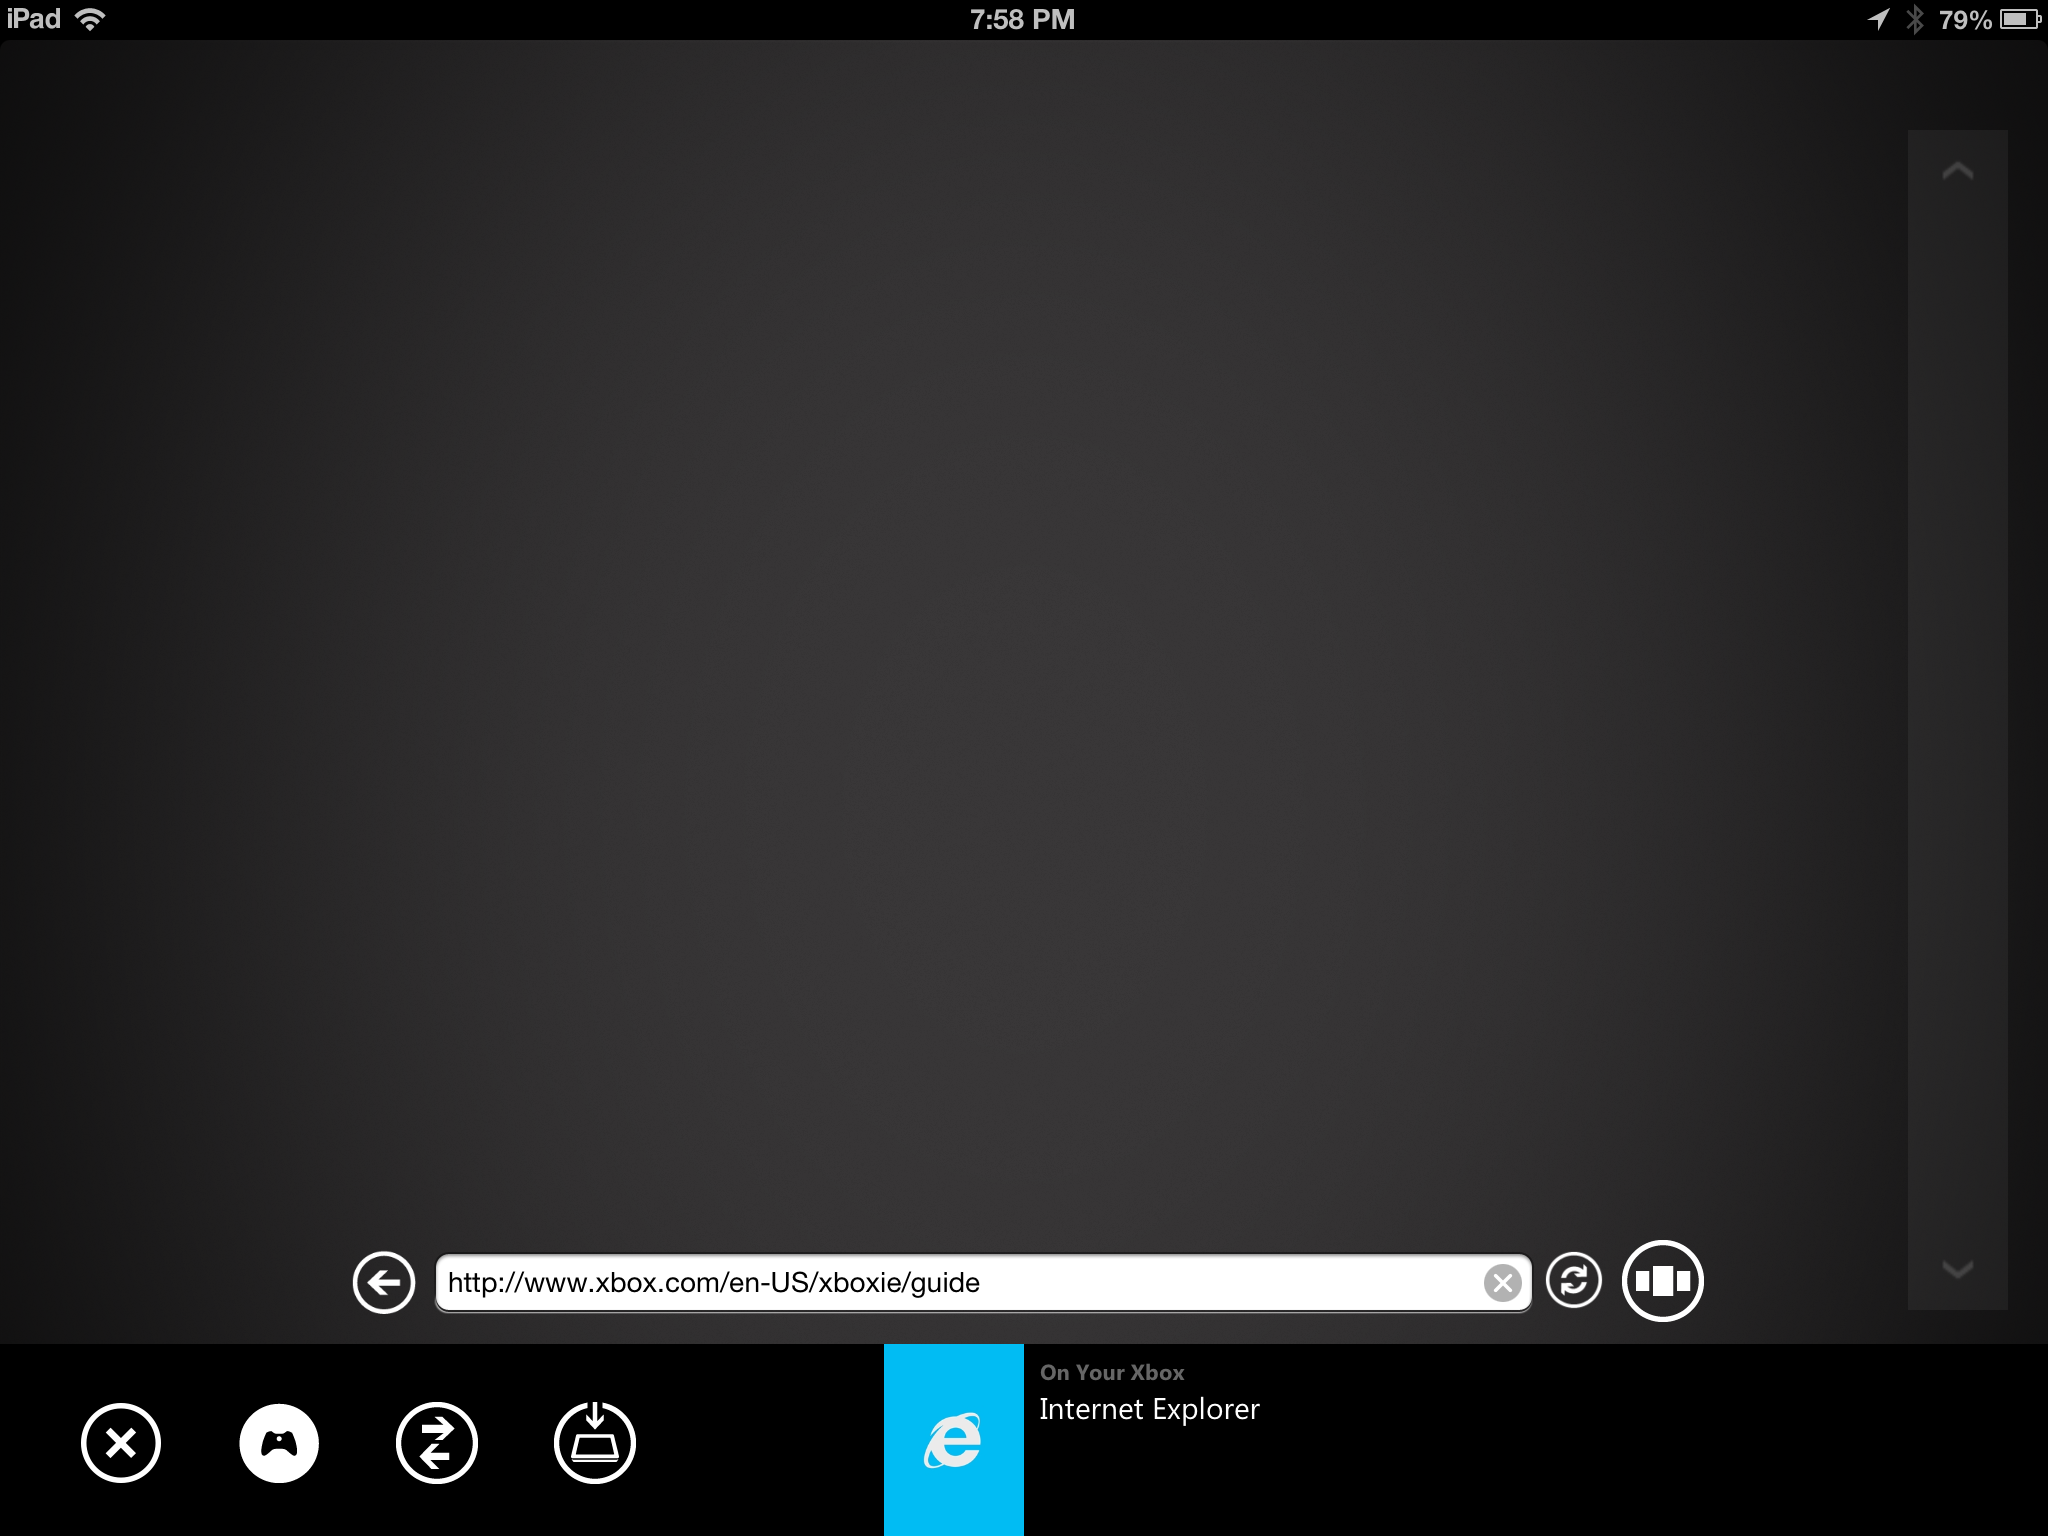 Internet Explorer screen on XBox SmartGlass